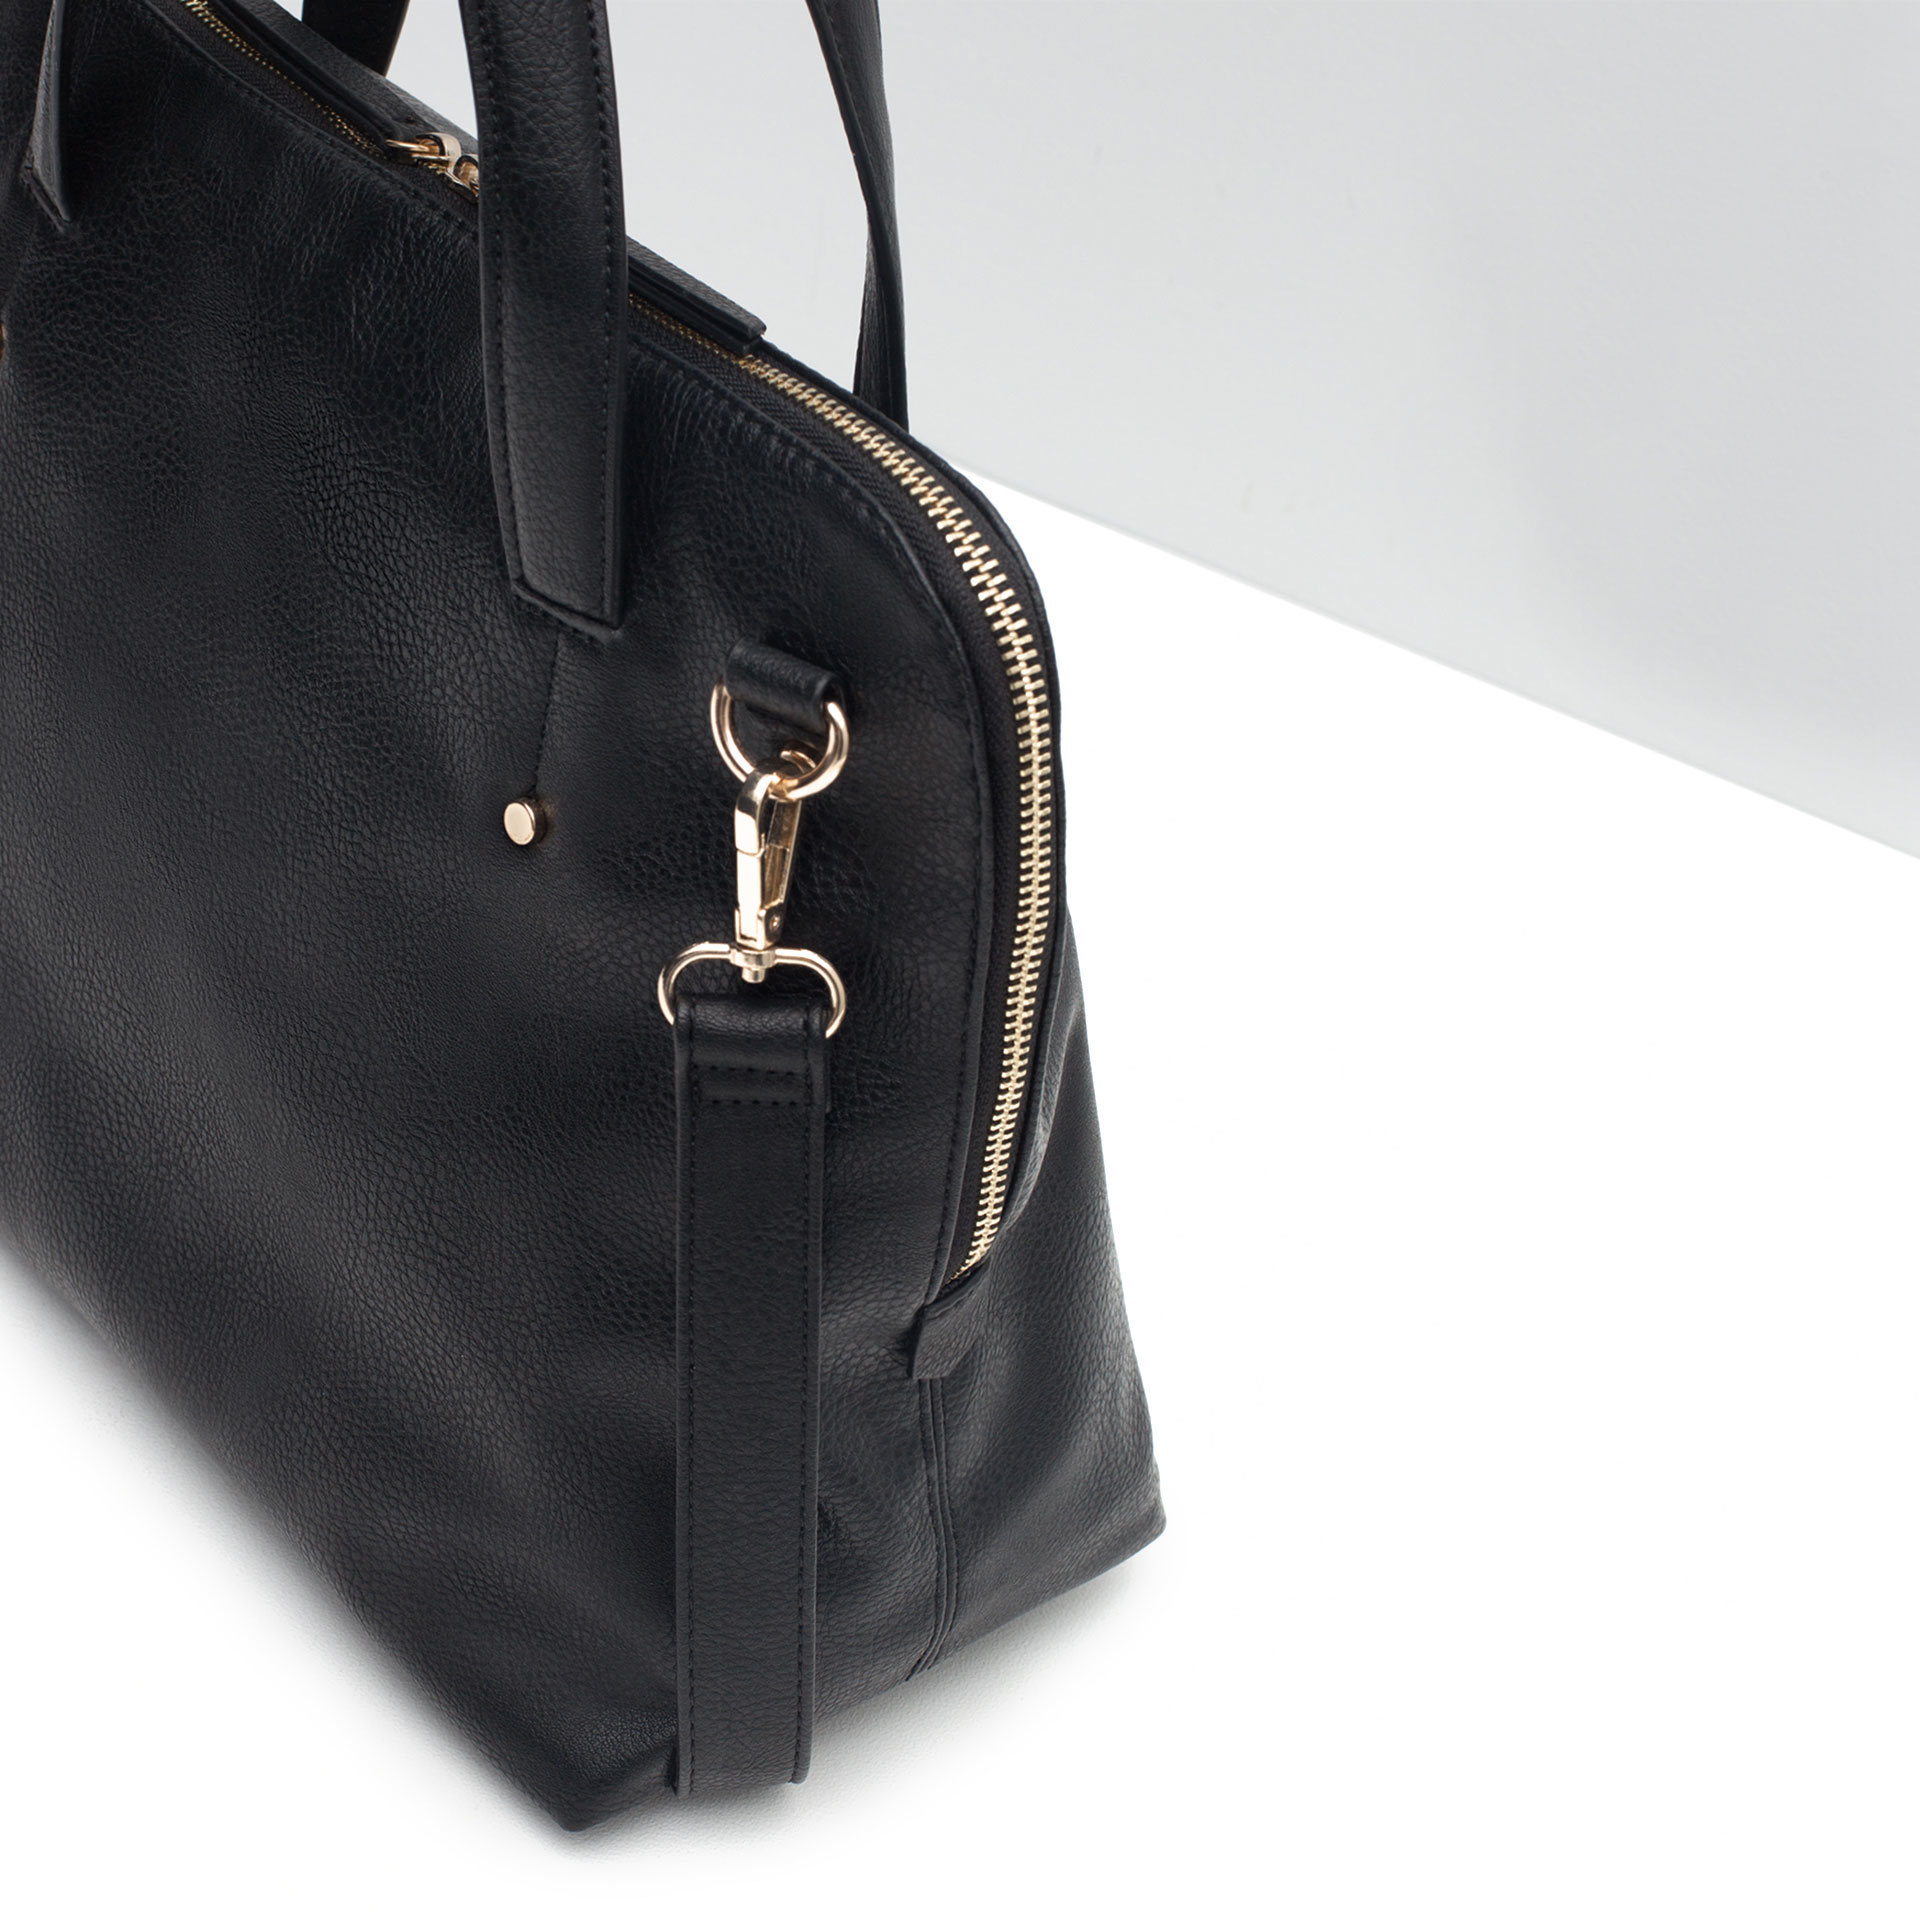 Zara Soft City Bag in Black | Lyst